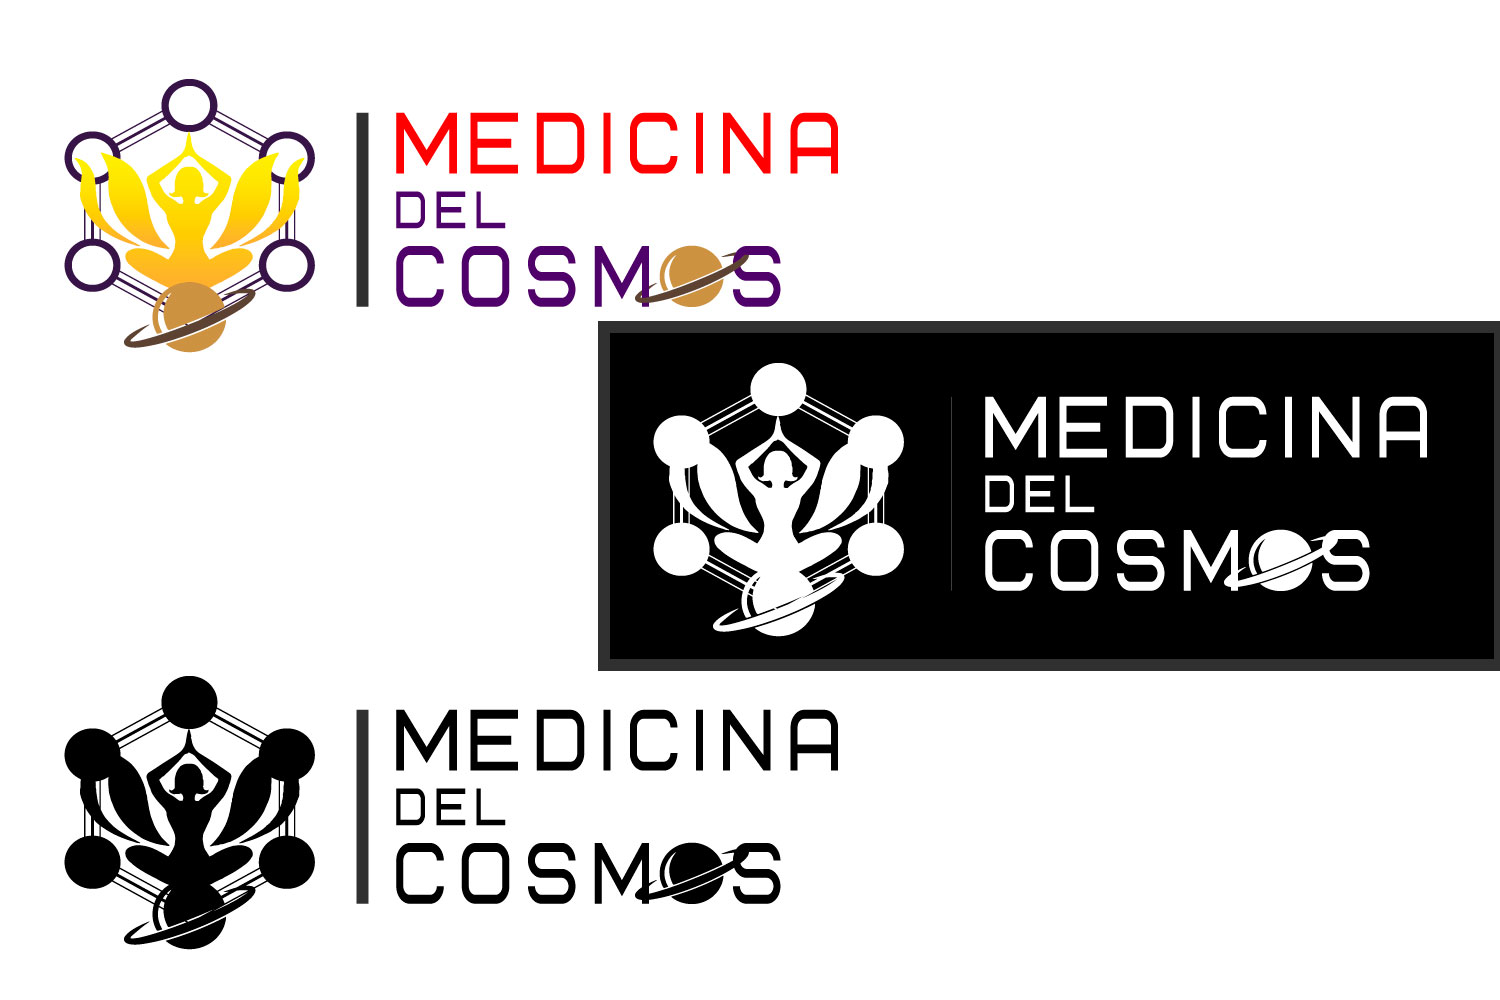 Medicina del cosmoc pinterest preview image.